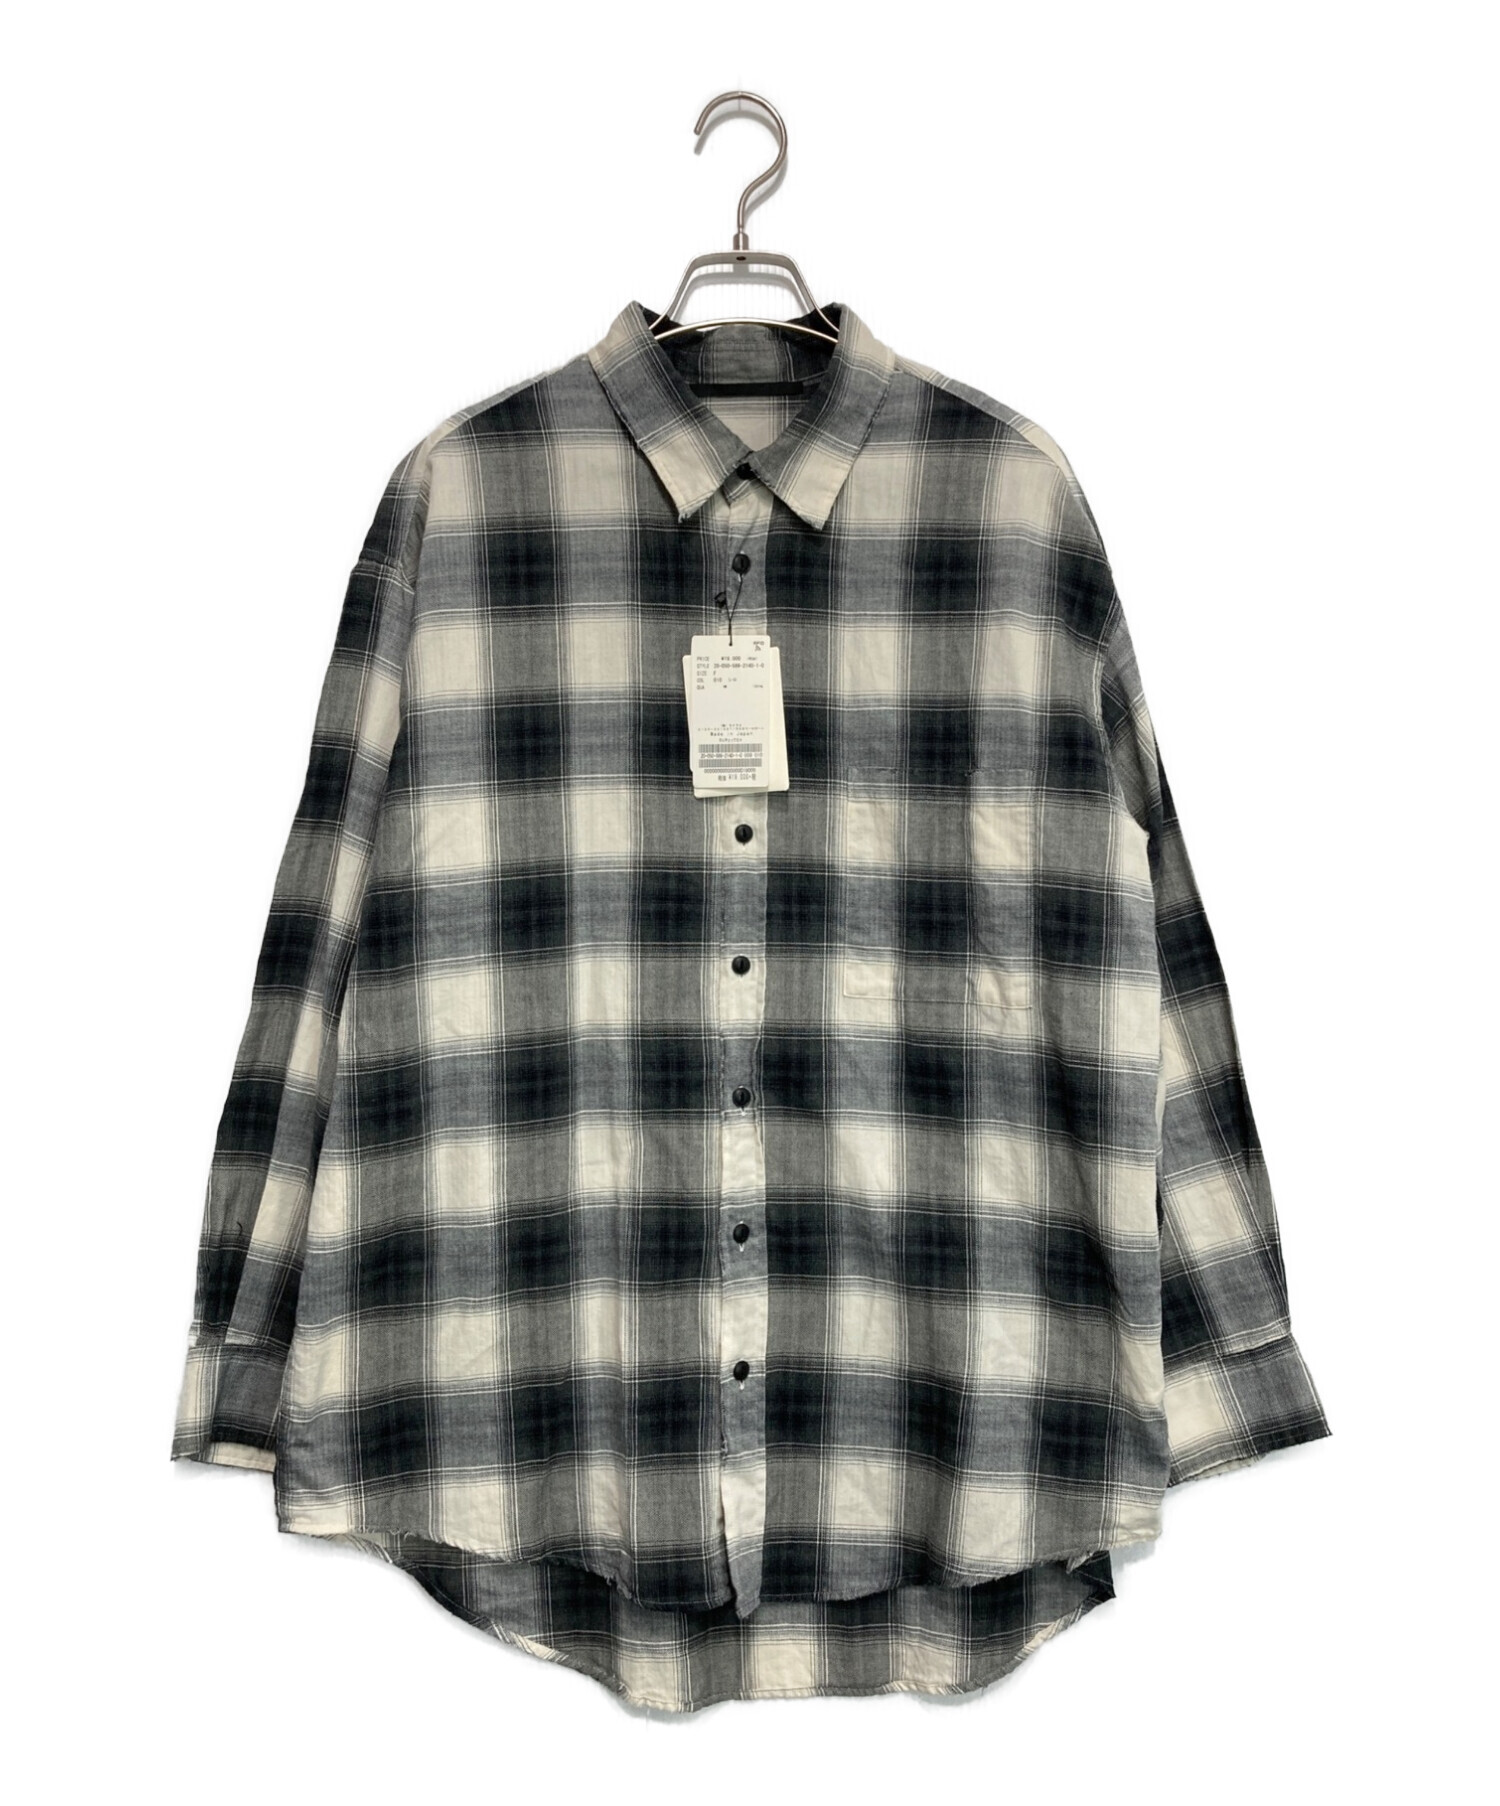 AP STUDIO (エーピーストゥディオ) ネルチェックシャツ ブラック×ホワイト サイズ:F 未使用品